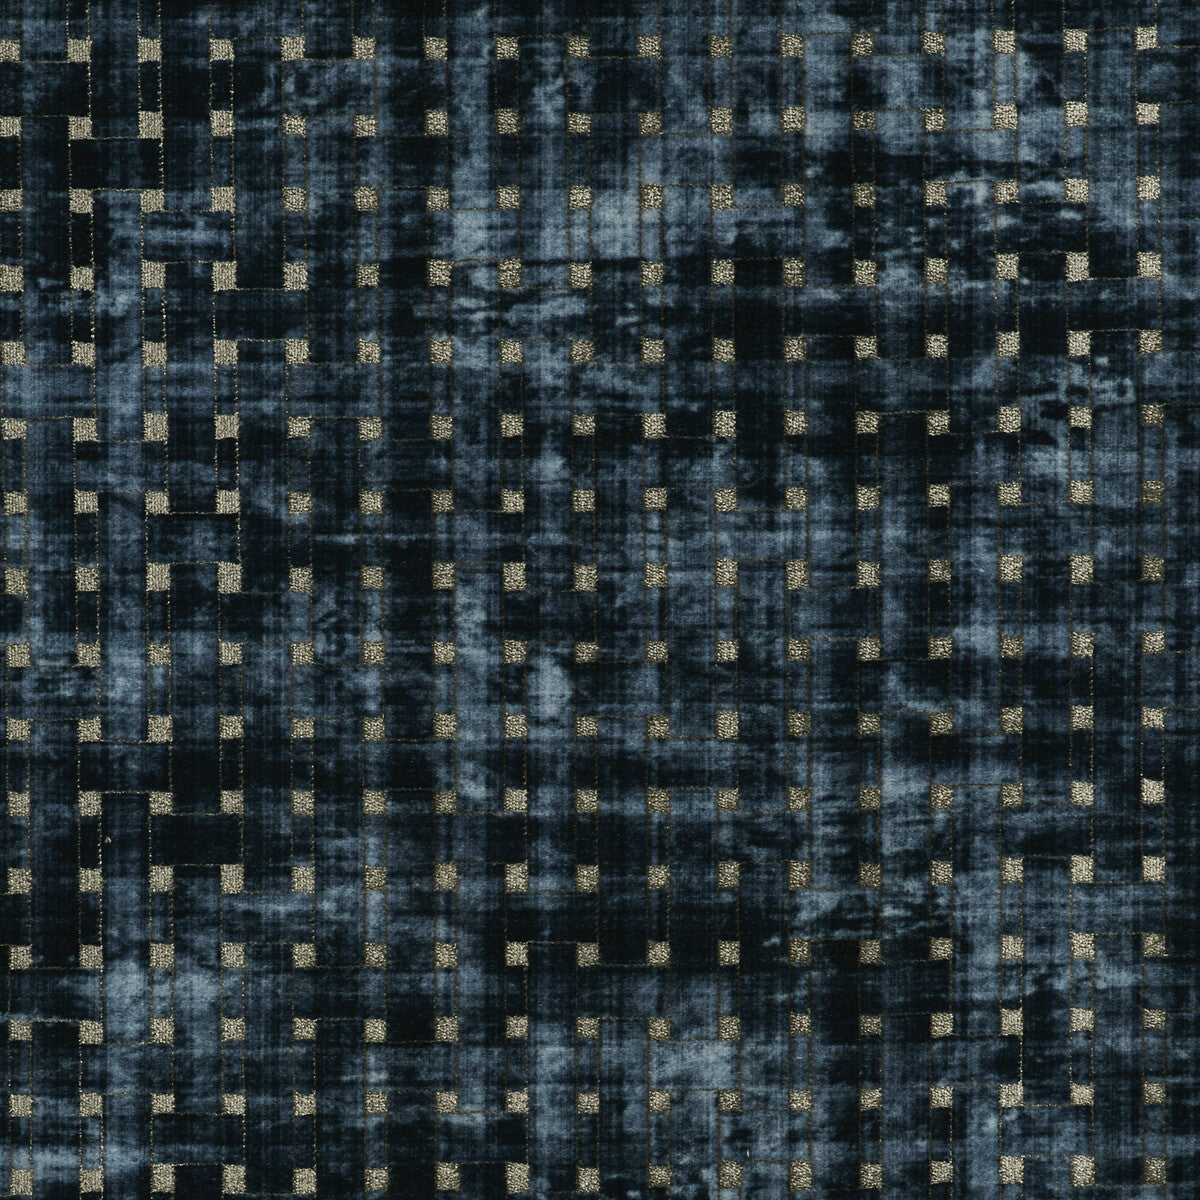 Genaro fabric in azul color - pattern LCT1016.001.0 - by Gaston y Daniela in the Lorenzo Castillo V collection